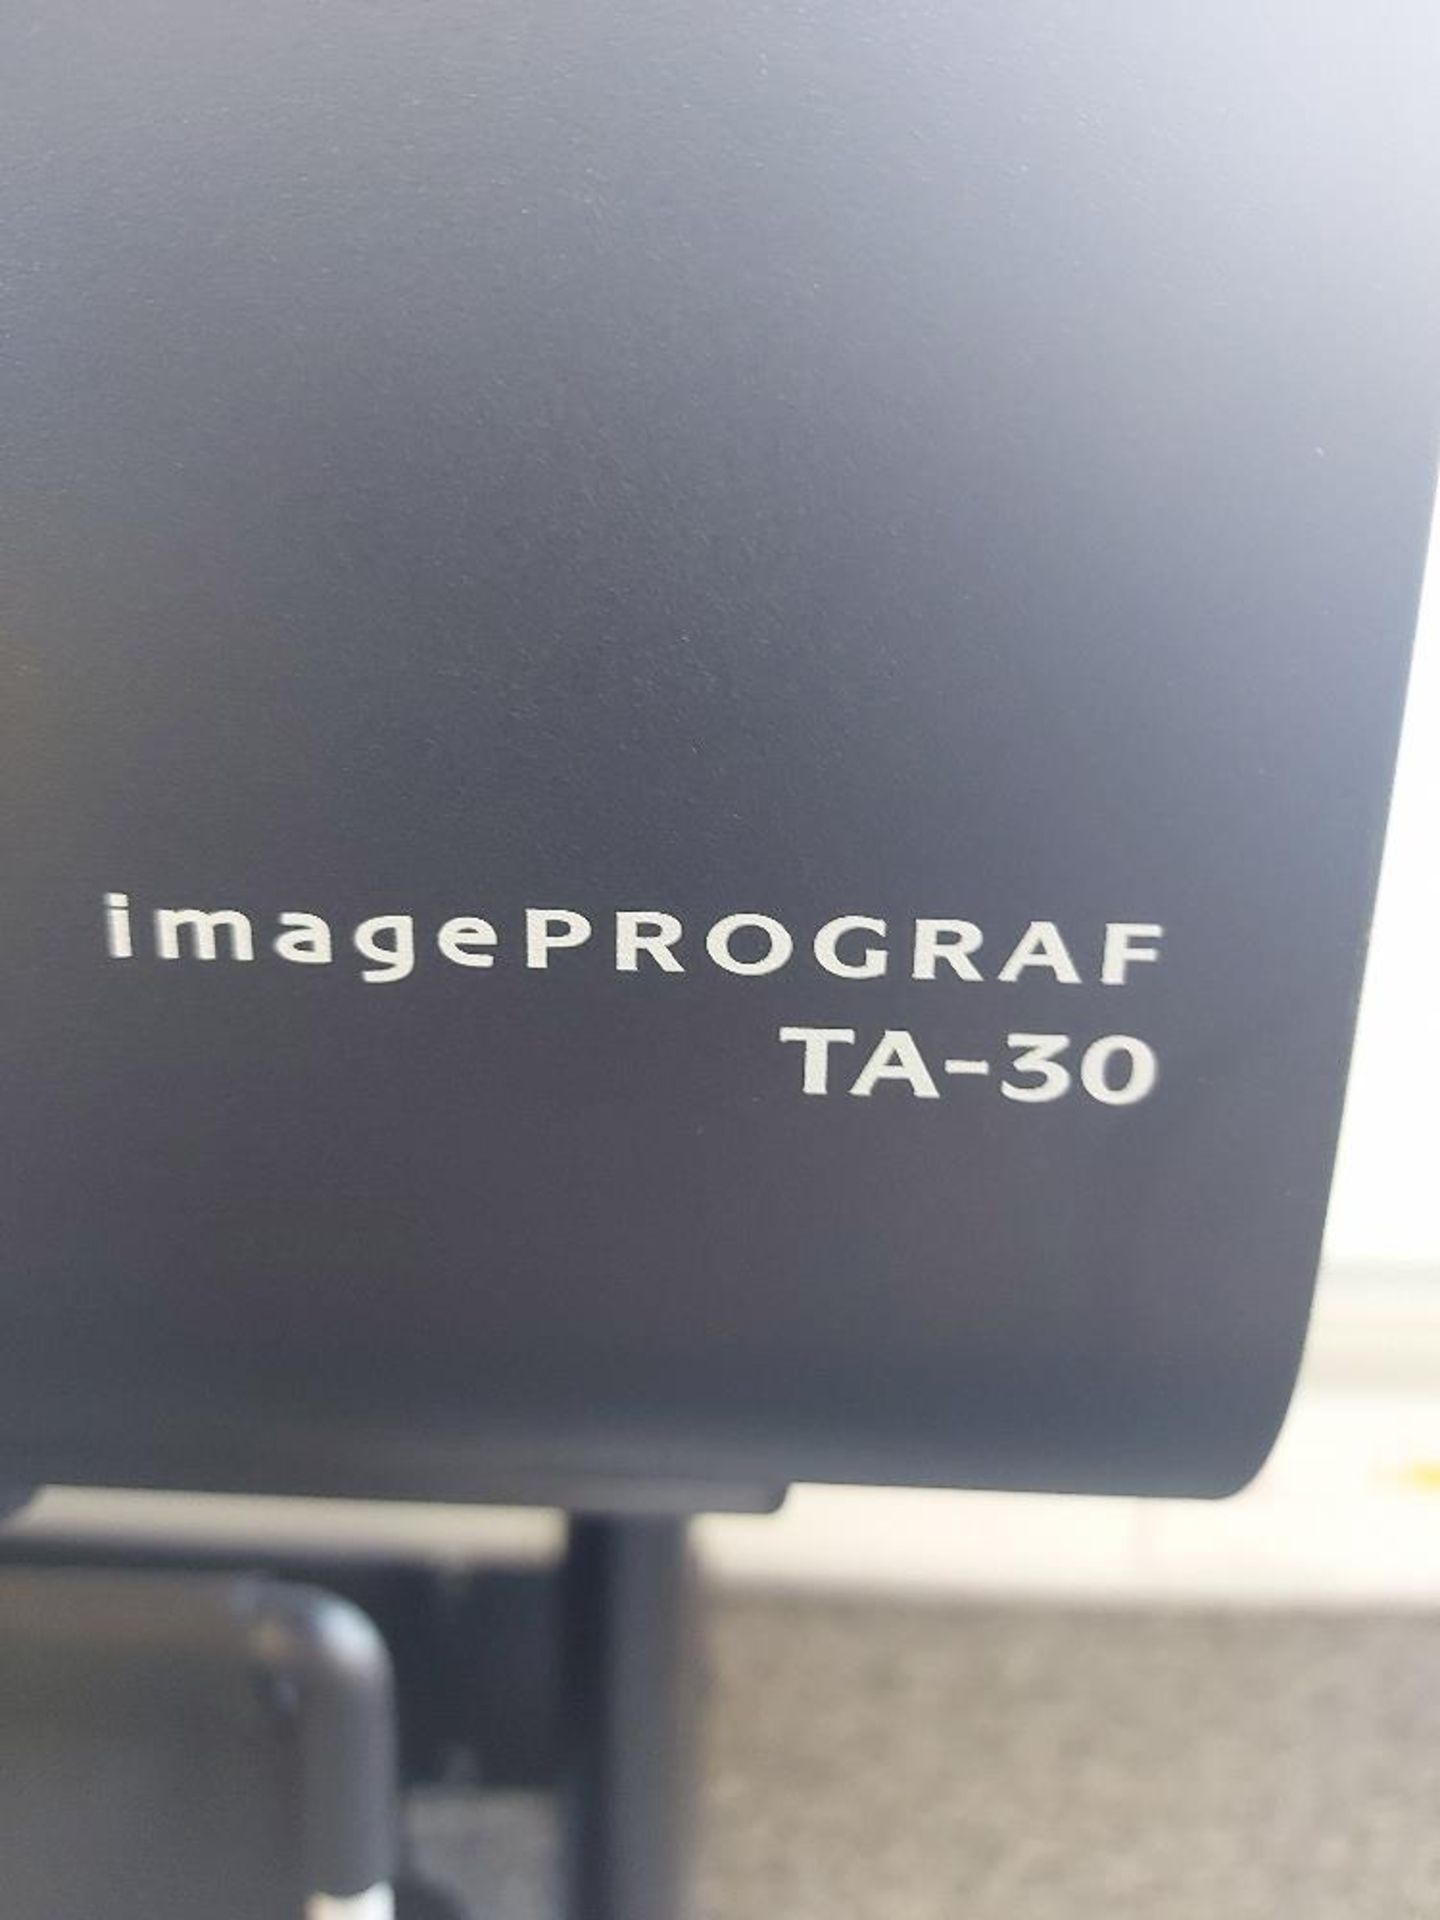 Canon ImageProGraf TA-30 Large Format Printer - Image 3 of 5